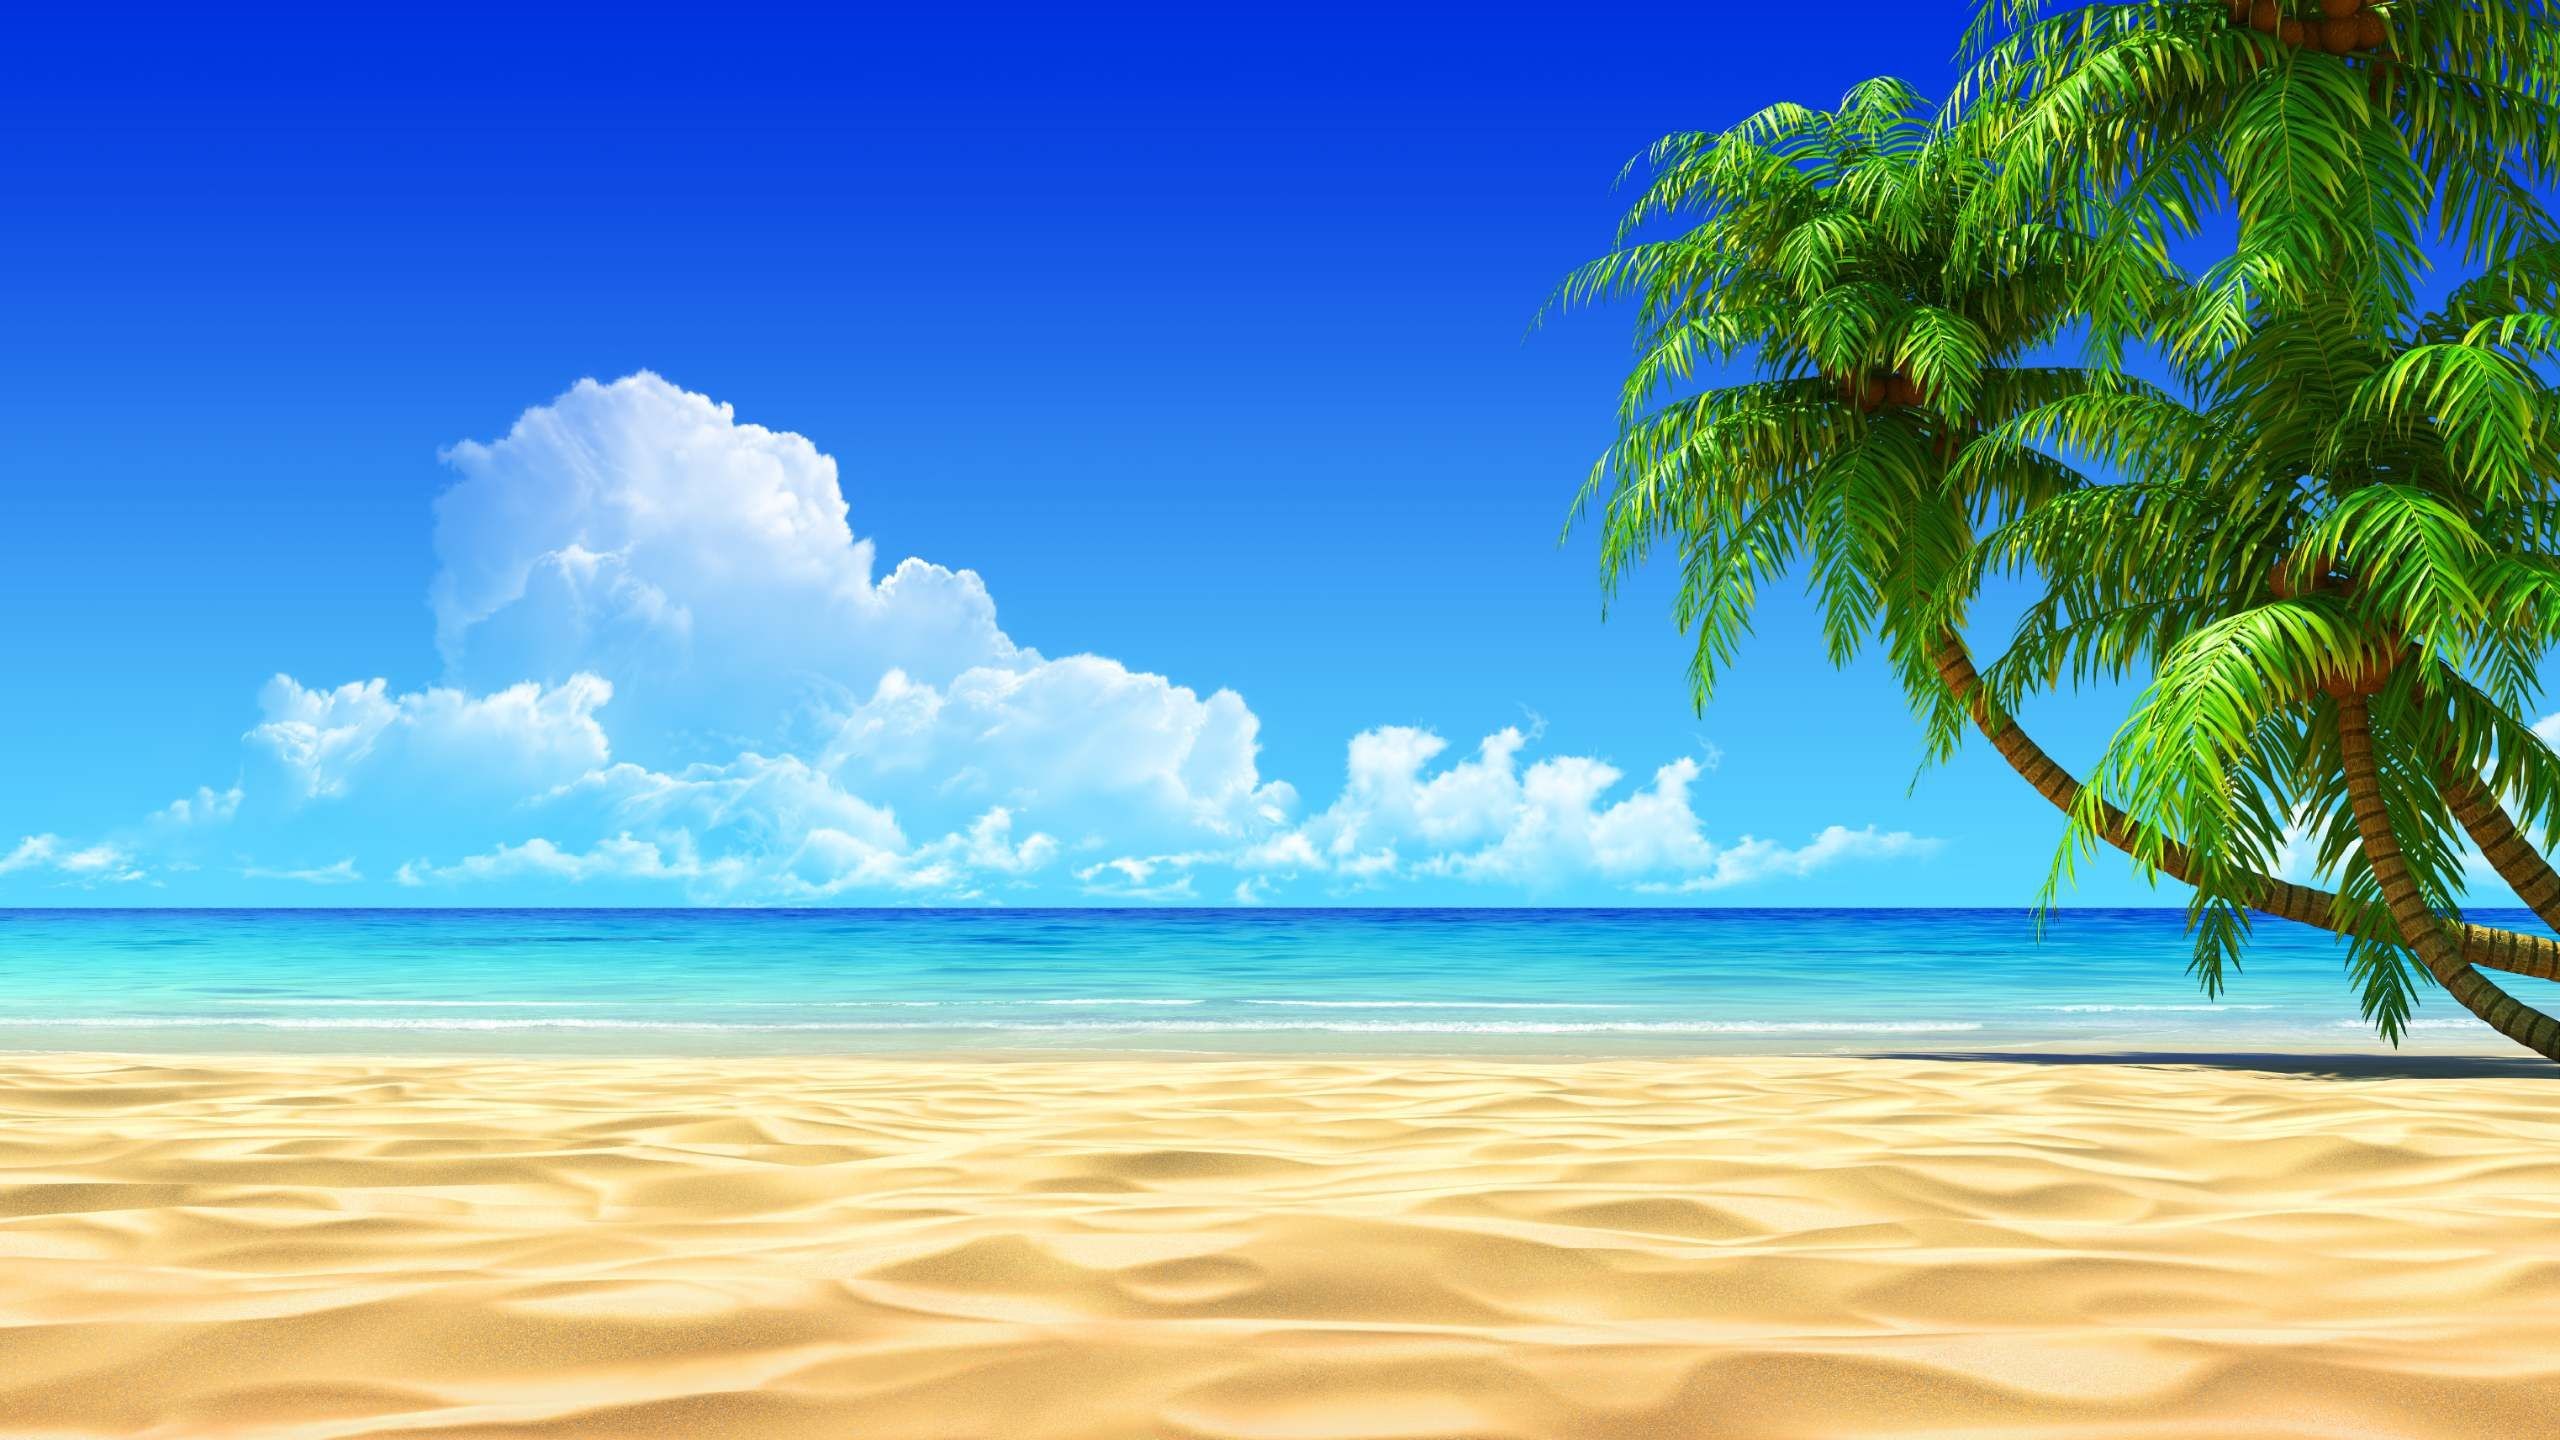 2560x1440 free widescreen wallpaper downloads awesome tropical beach desktop  background hd wallpaper widescreen images free download cool download  wallpaper stock ...